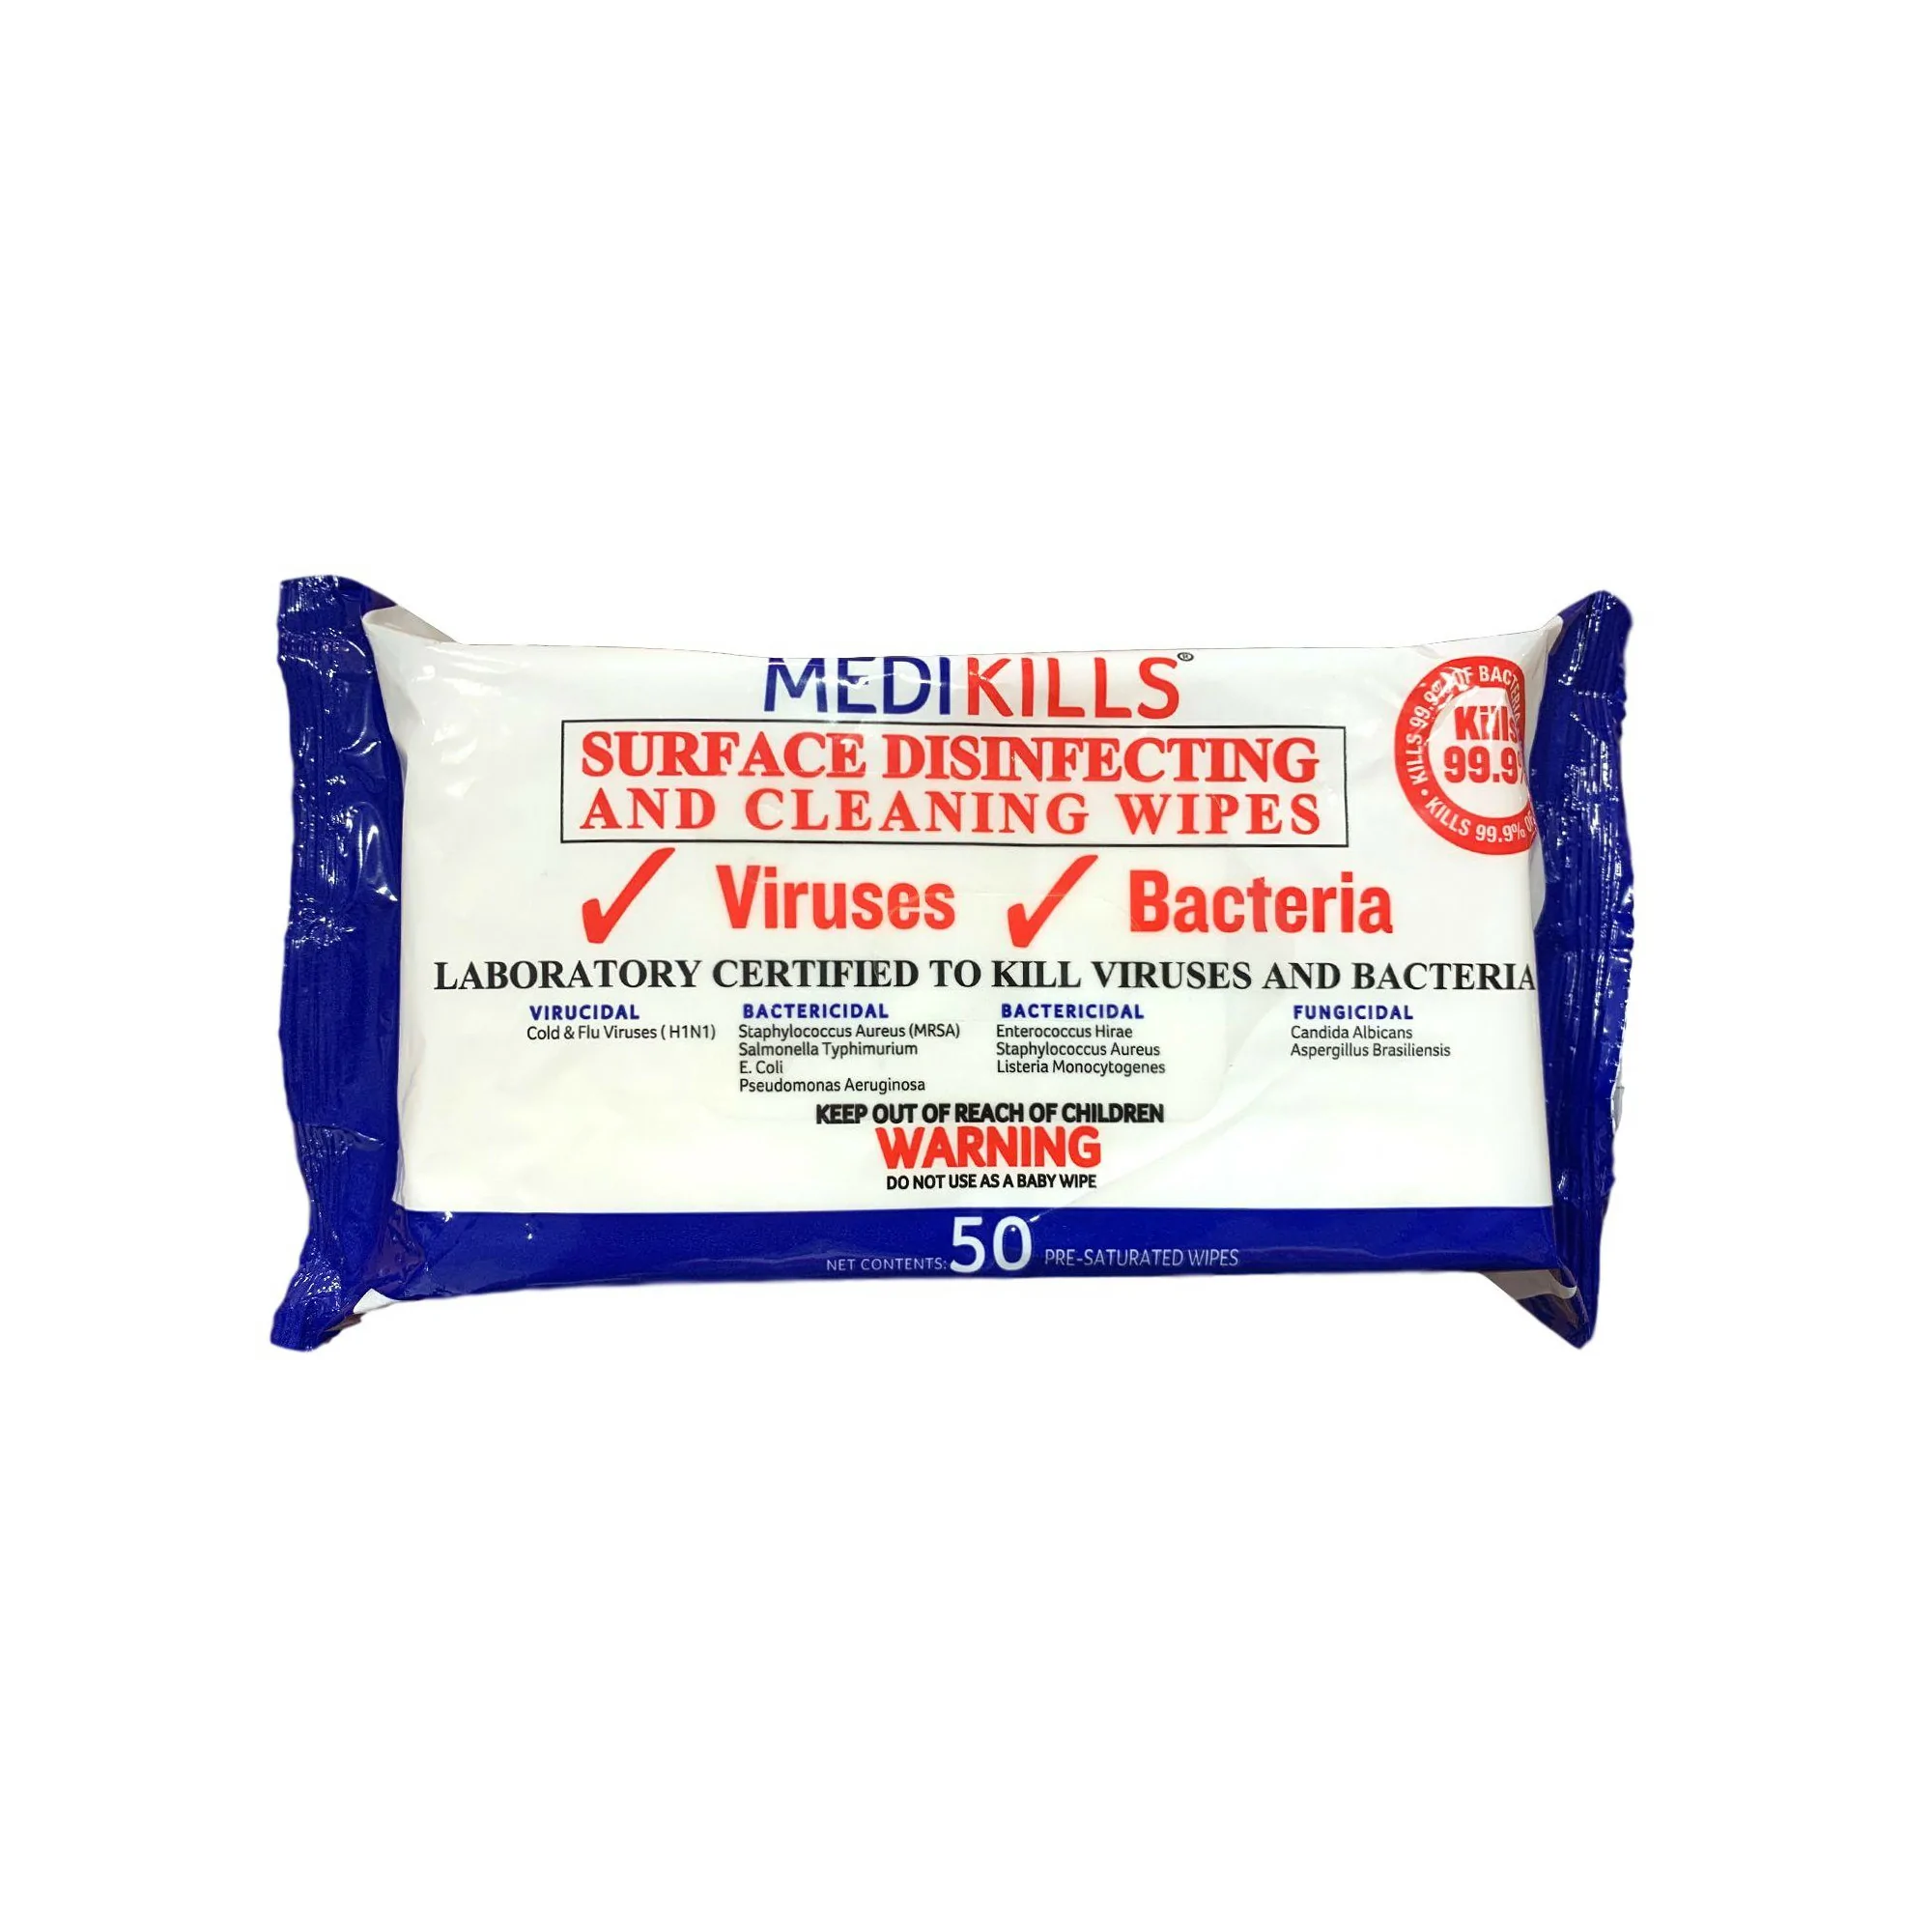 Lingettes virucides - Sachet de 50 lingettes - Medikills